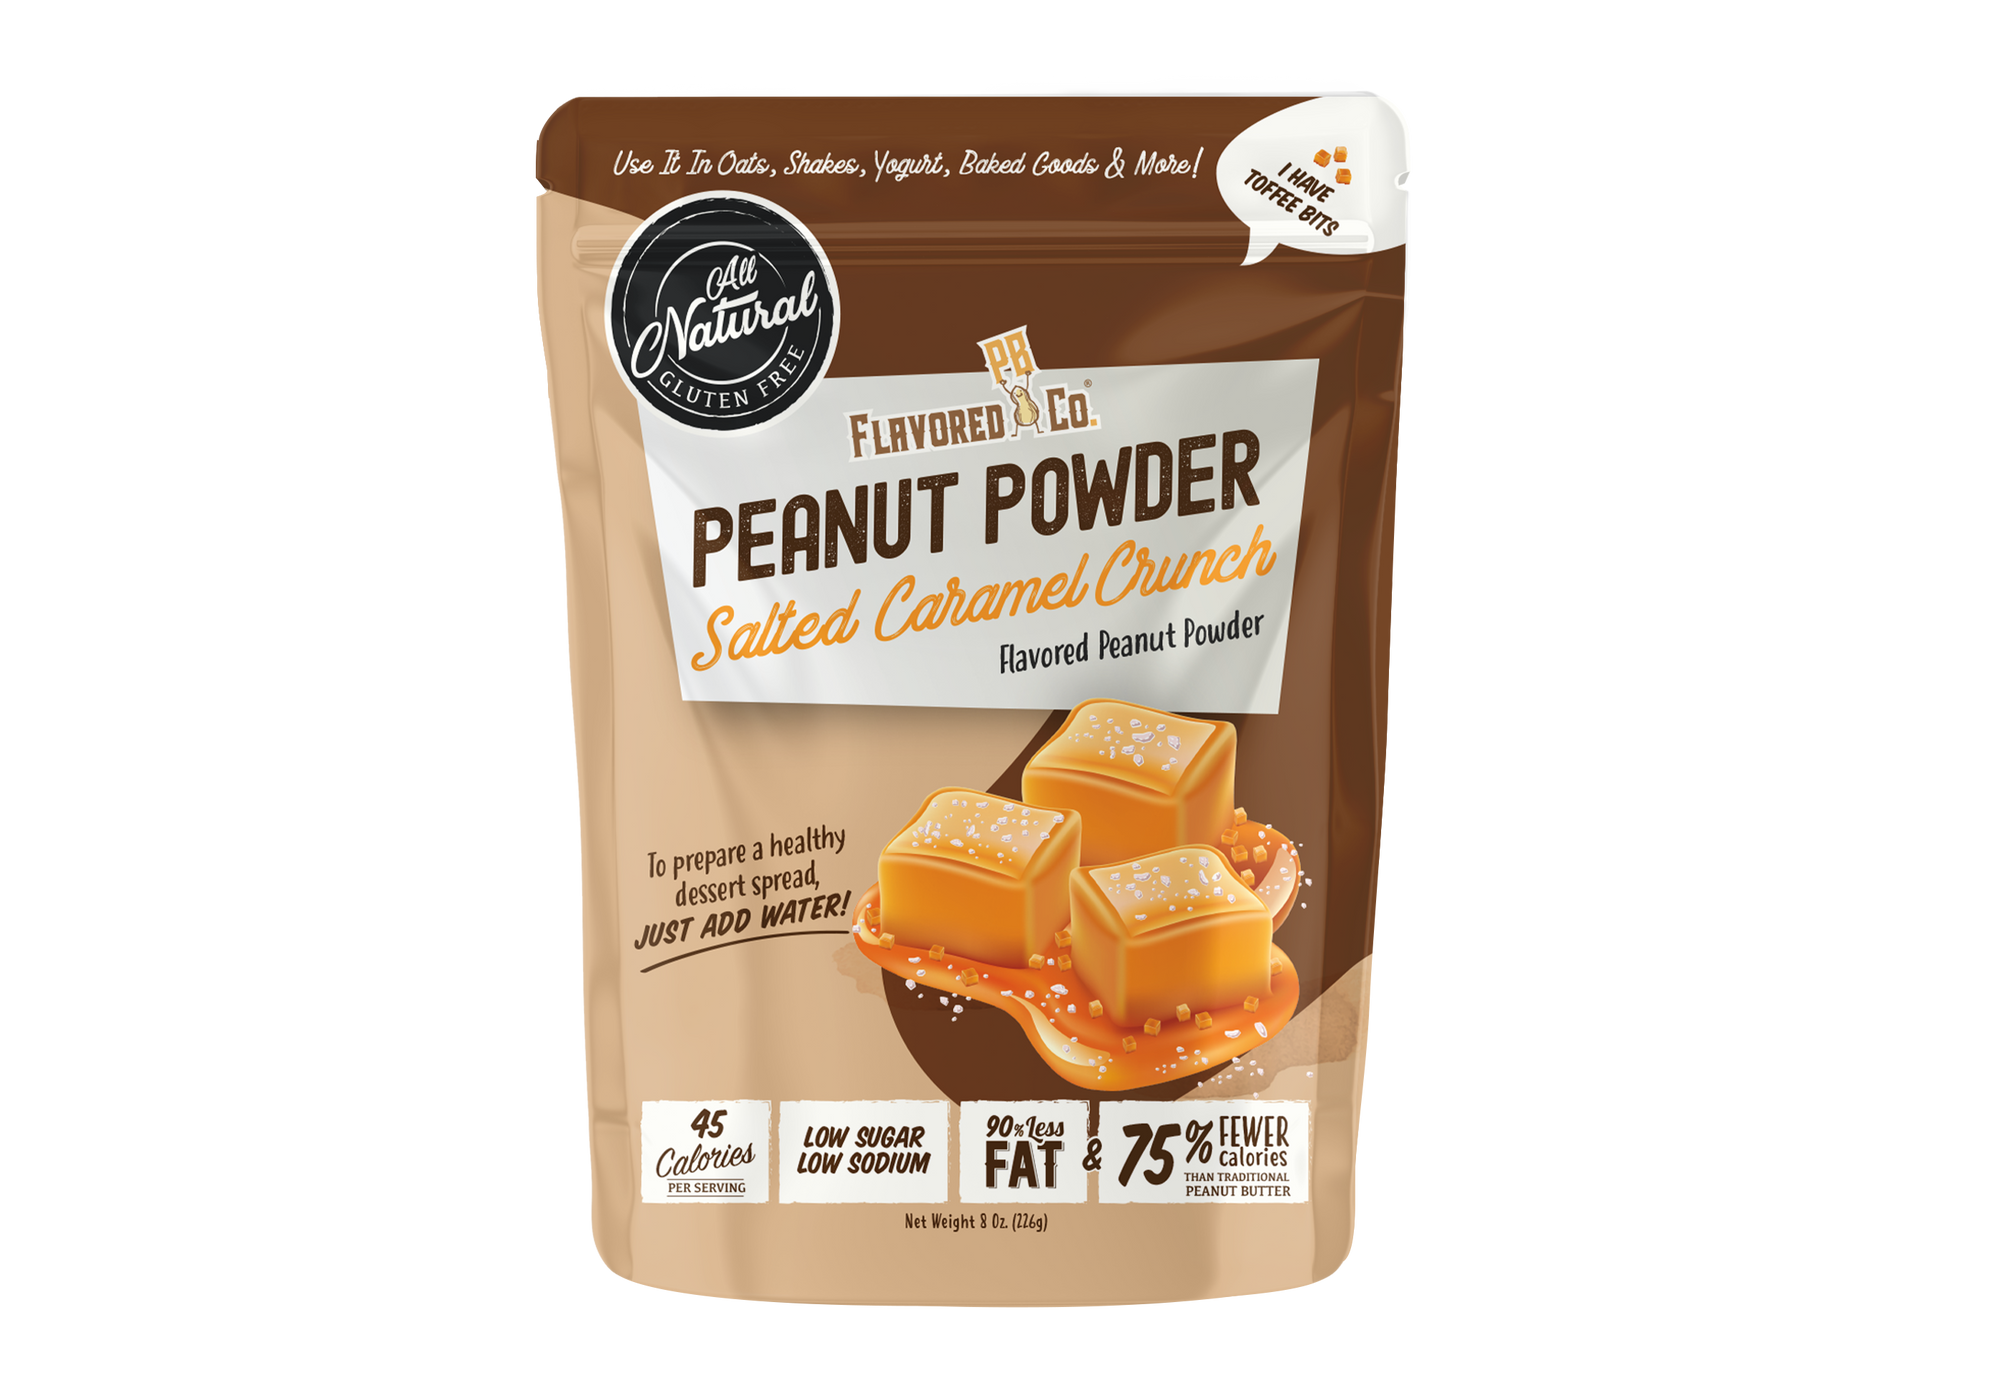 salted caramel crunch flavored peanut powder